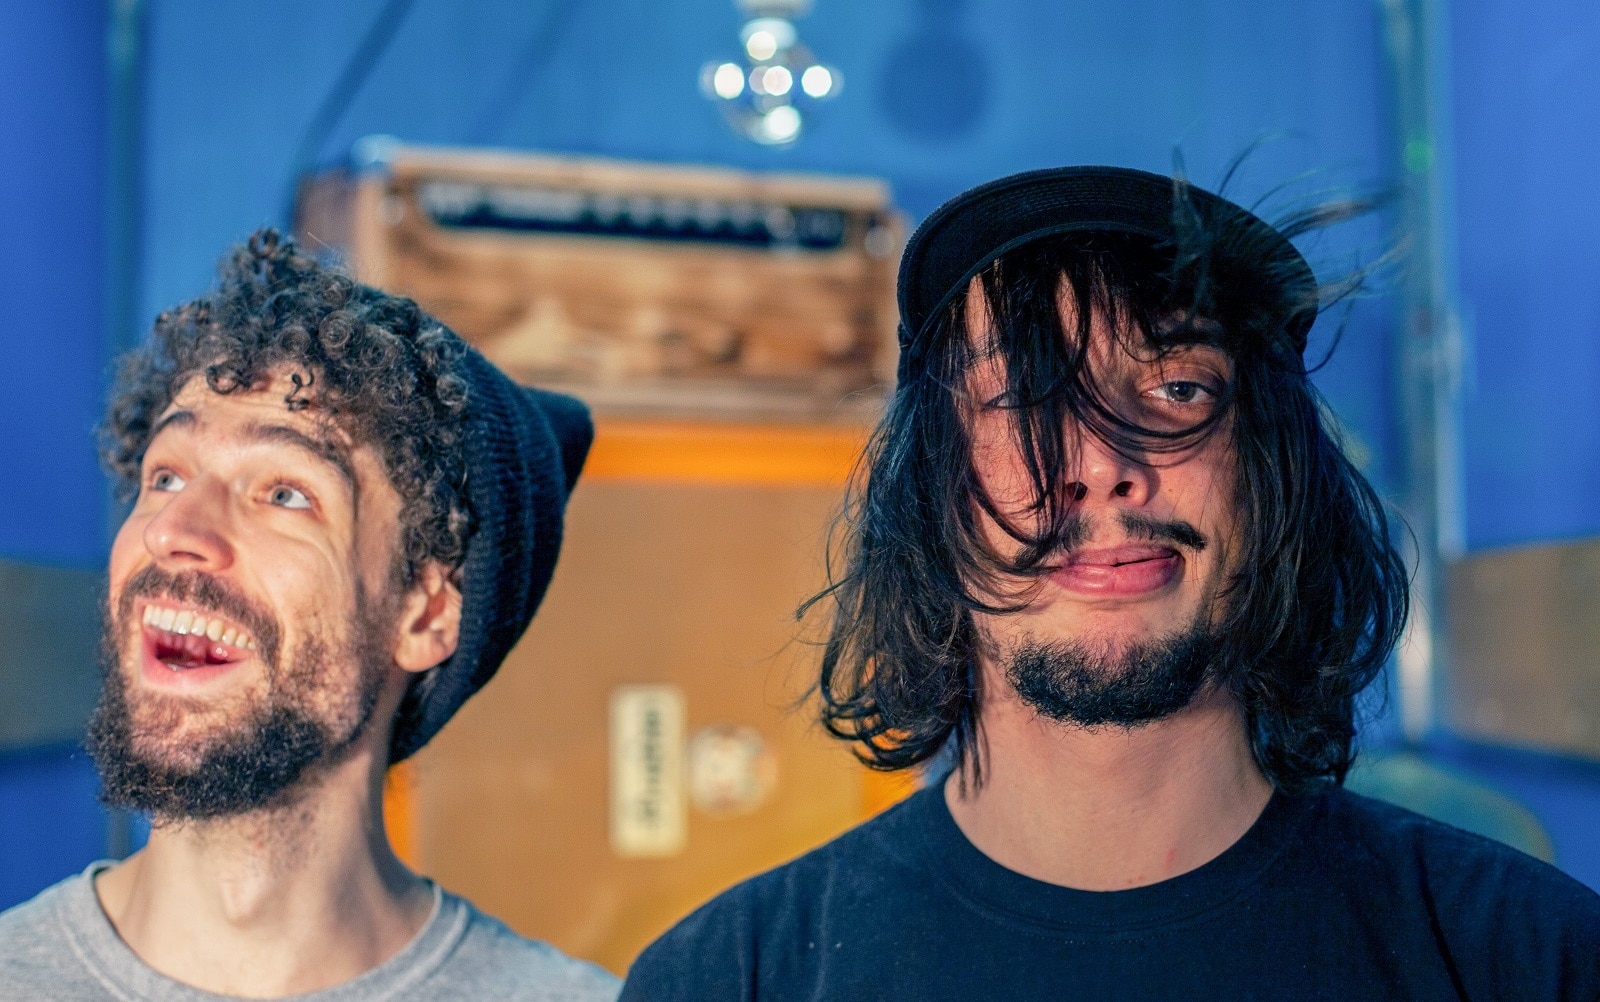 Schluss - Swiss math-rockfree-noise duet BUNKR premiere new adventurous track